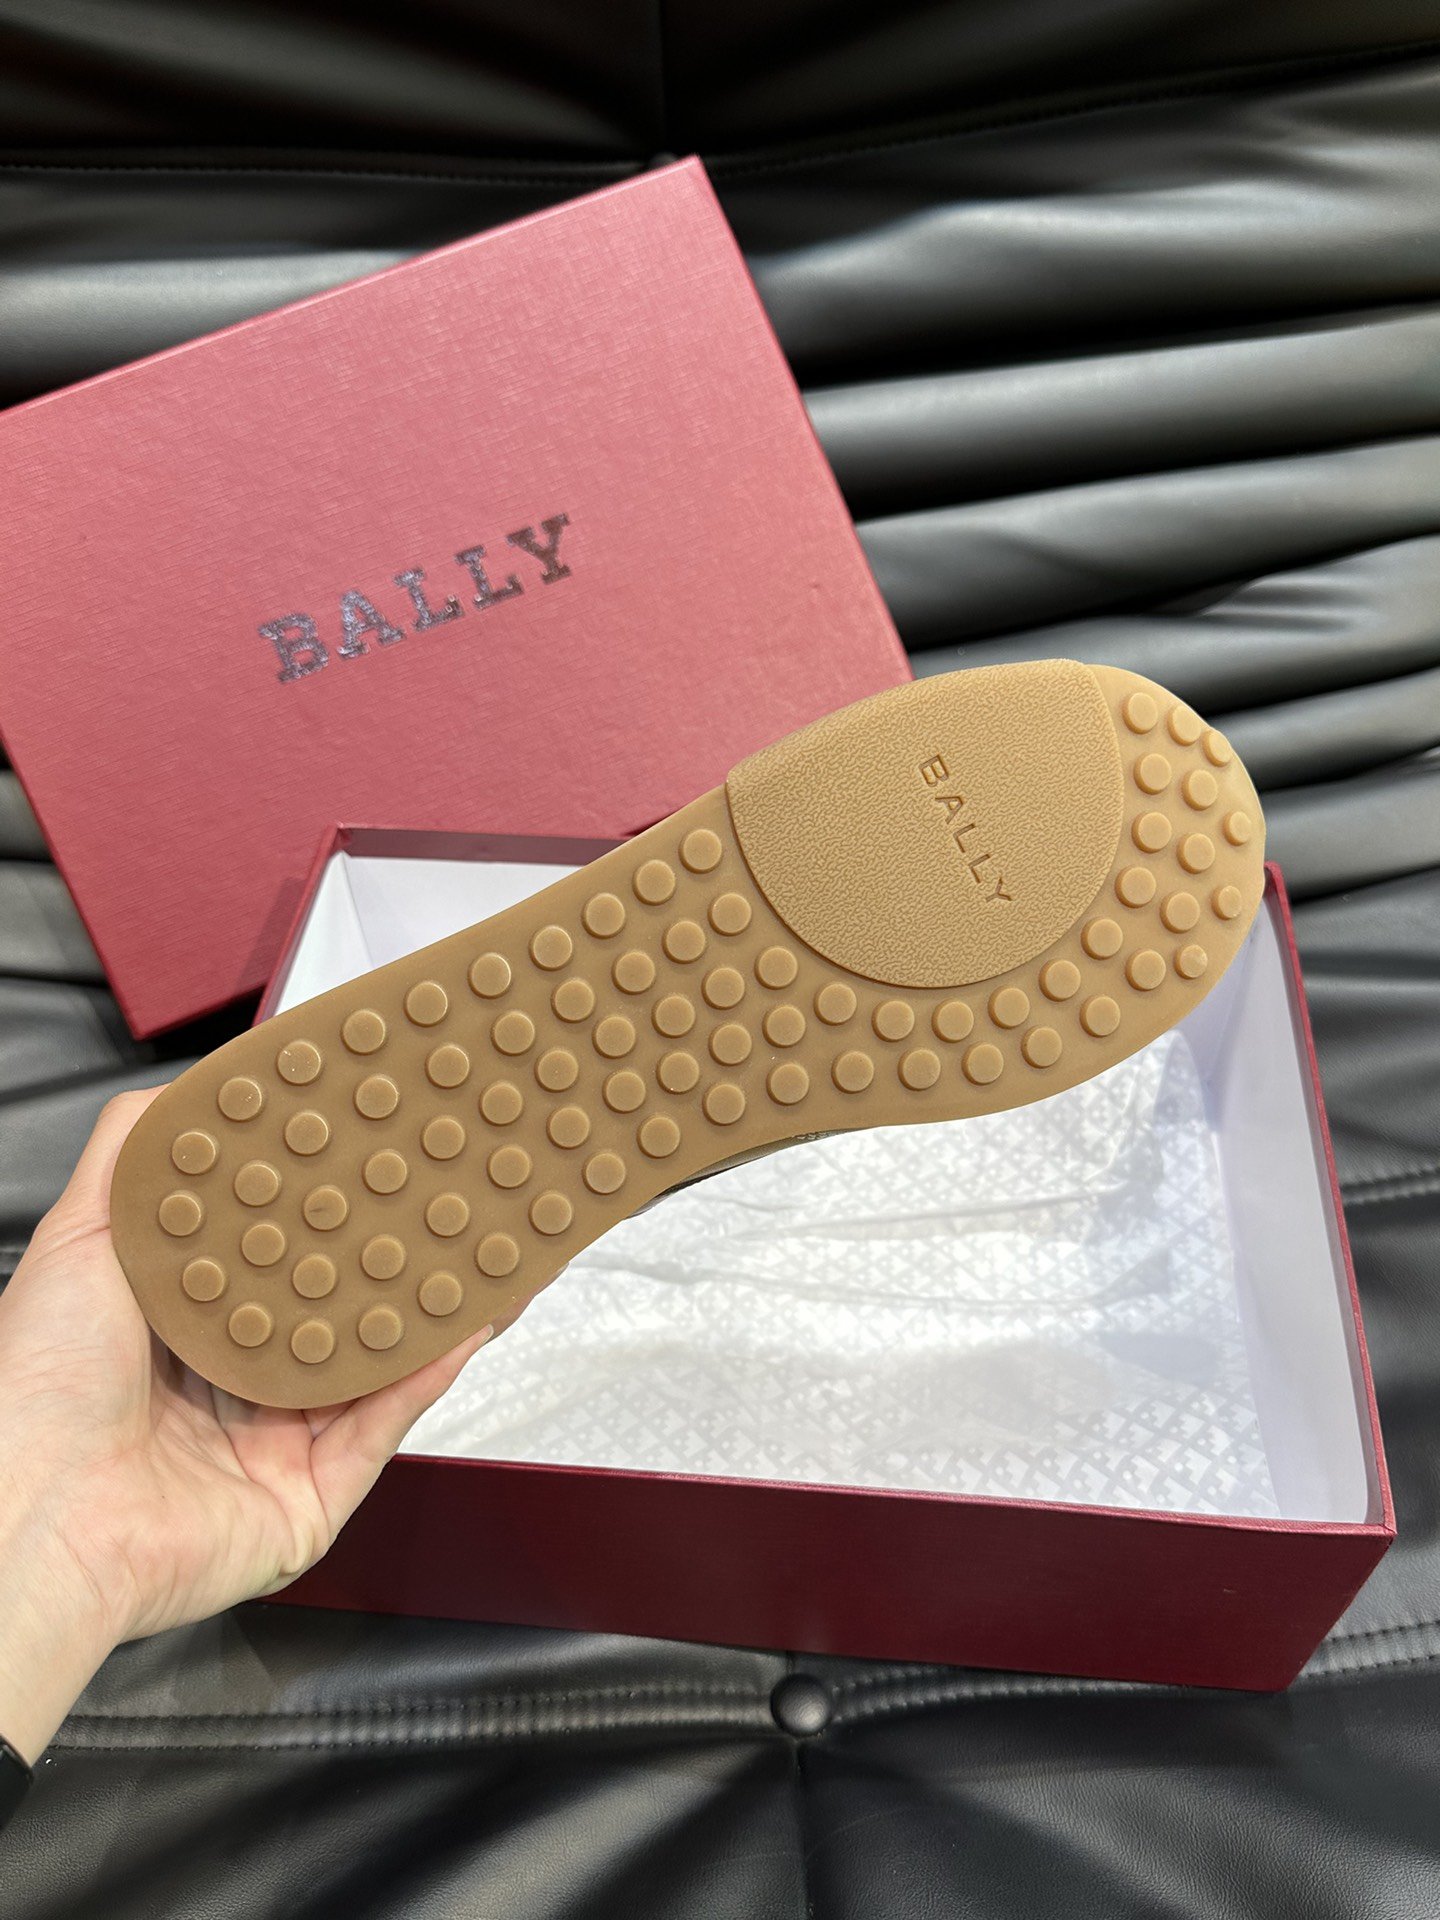 BALLY/巴利男士皮革休闲运动鞋头层小牛皮鞋面拼色设计简约时尚风格搭配经典Bally元素点缀细节鞋身撞